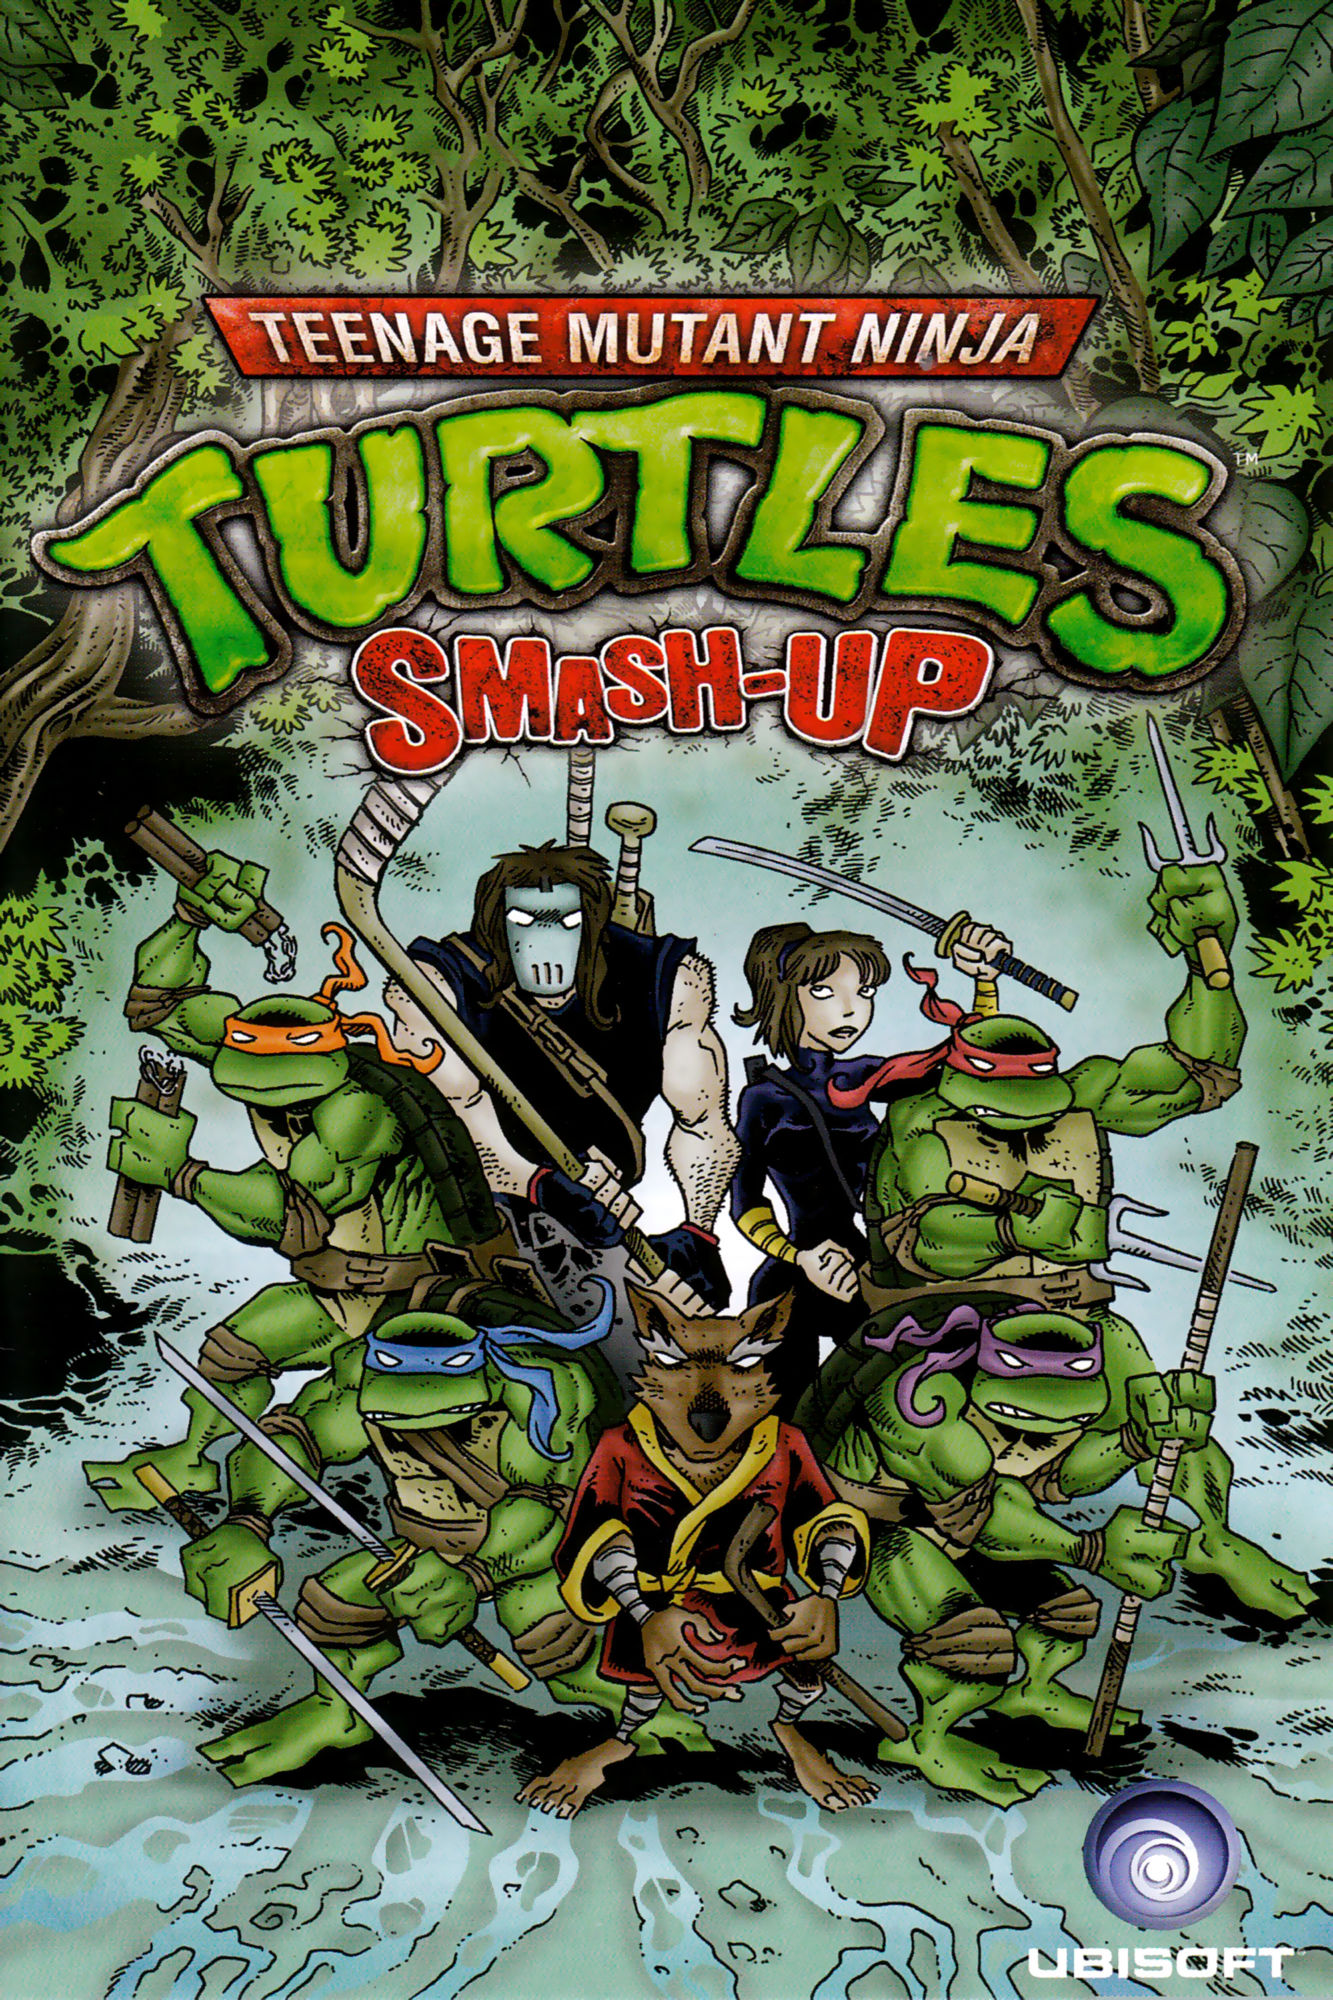 https://bleedingcool.com/comics/obscure-comics-teenage-mutant-ninja-turtles-smash-up-1/attachment/smashup_0001/